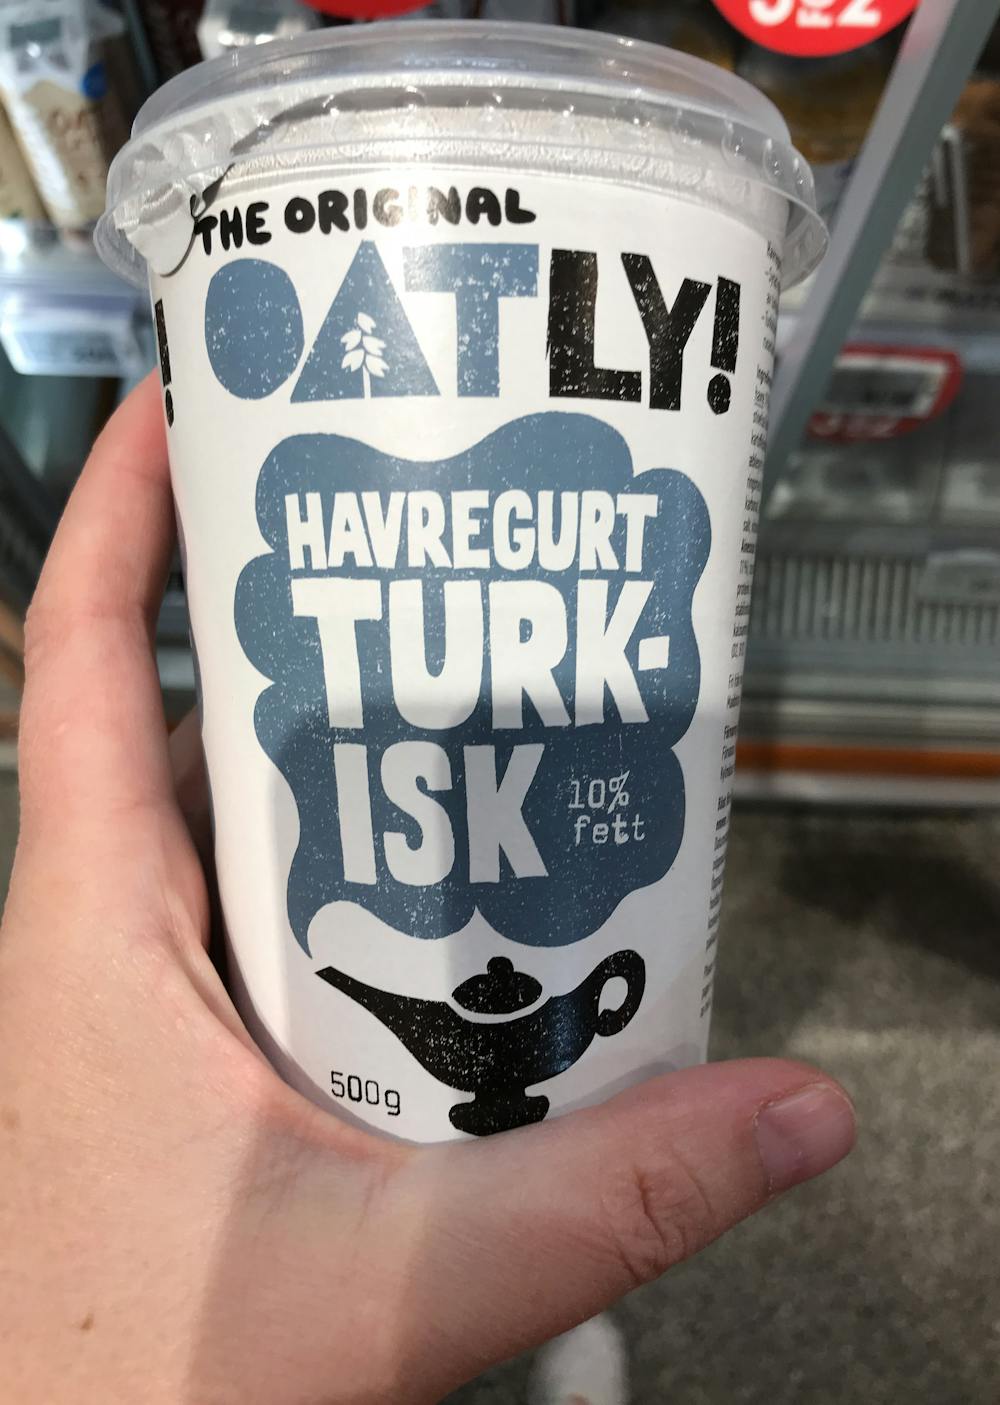 Havregurt turkisk, Oatly!